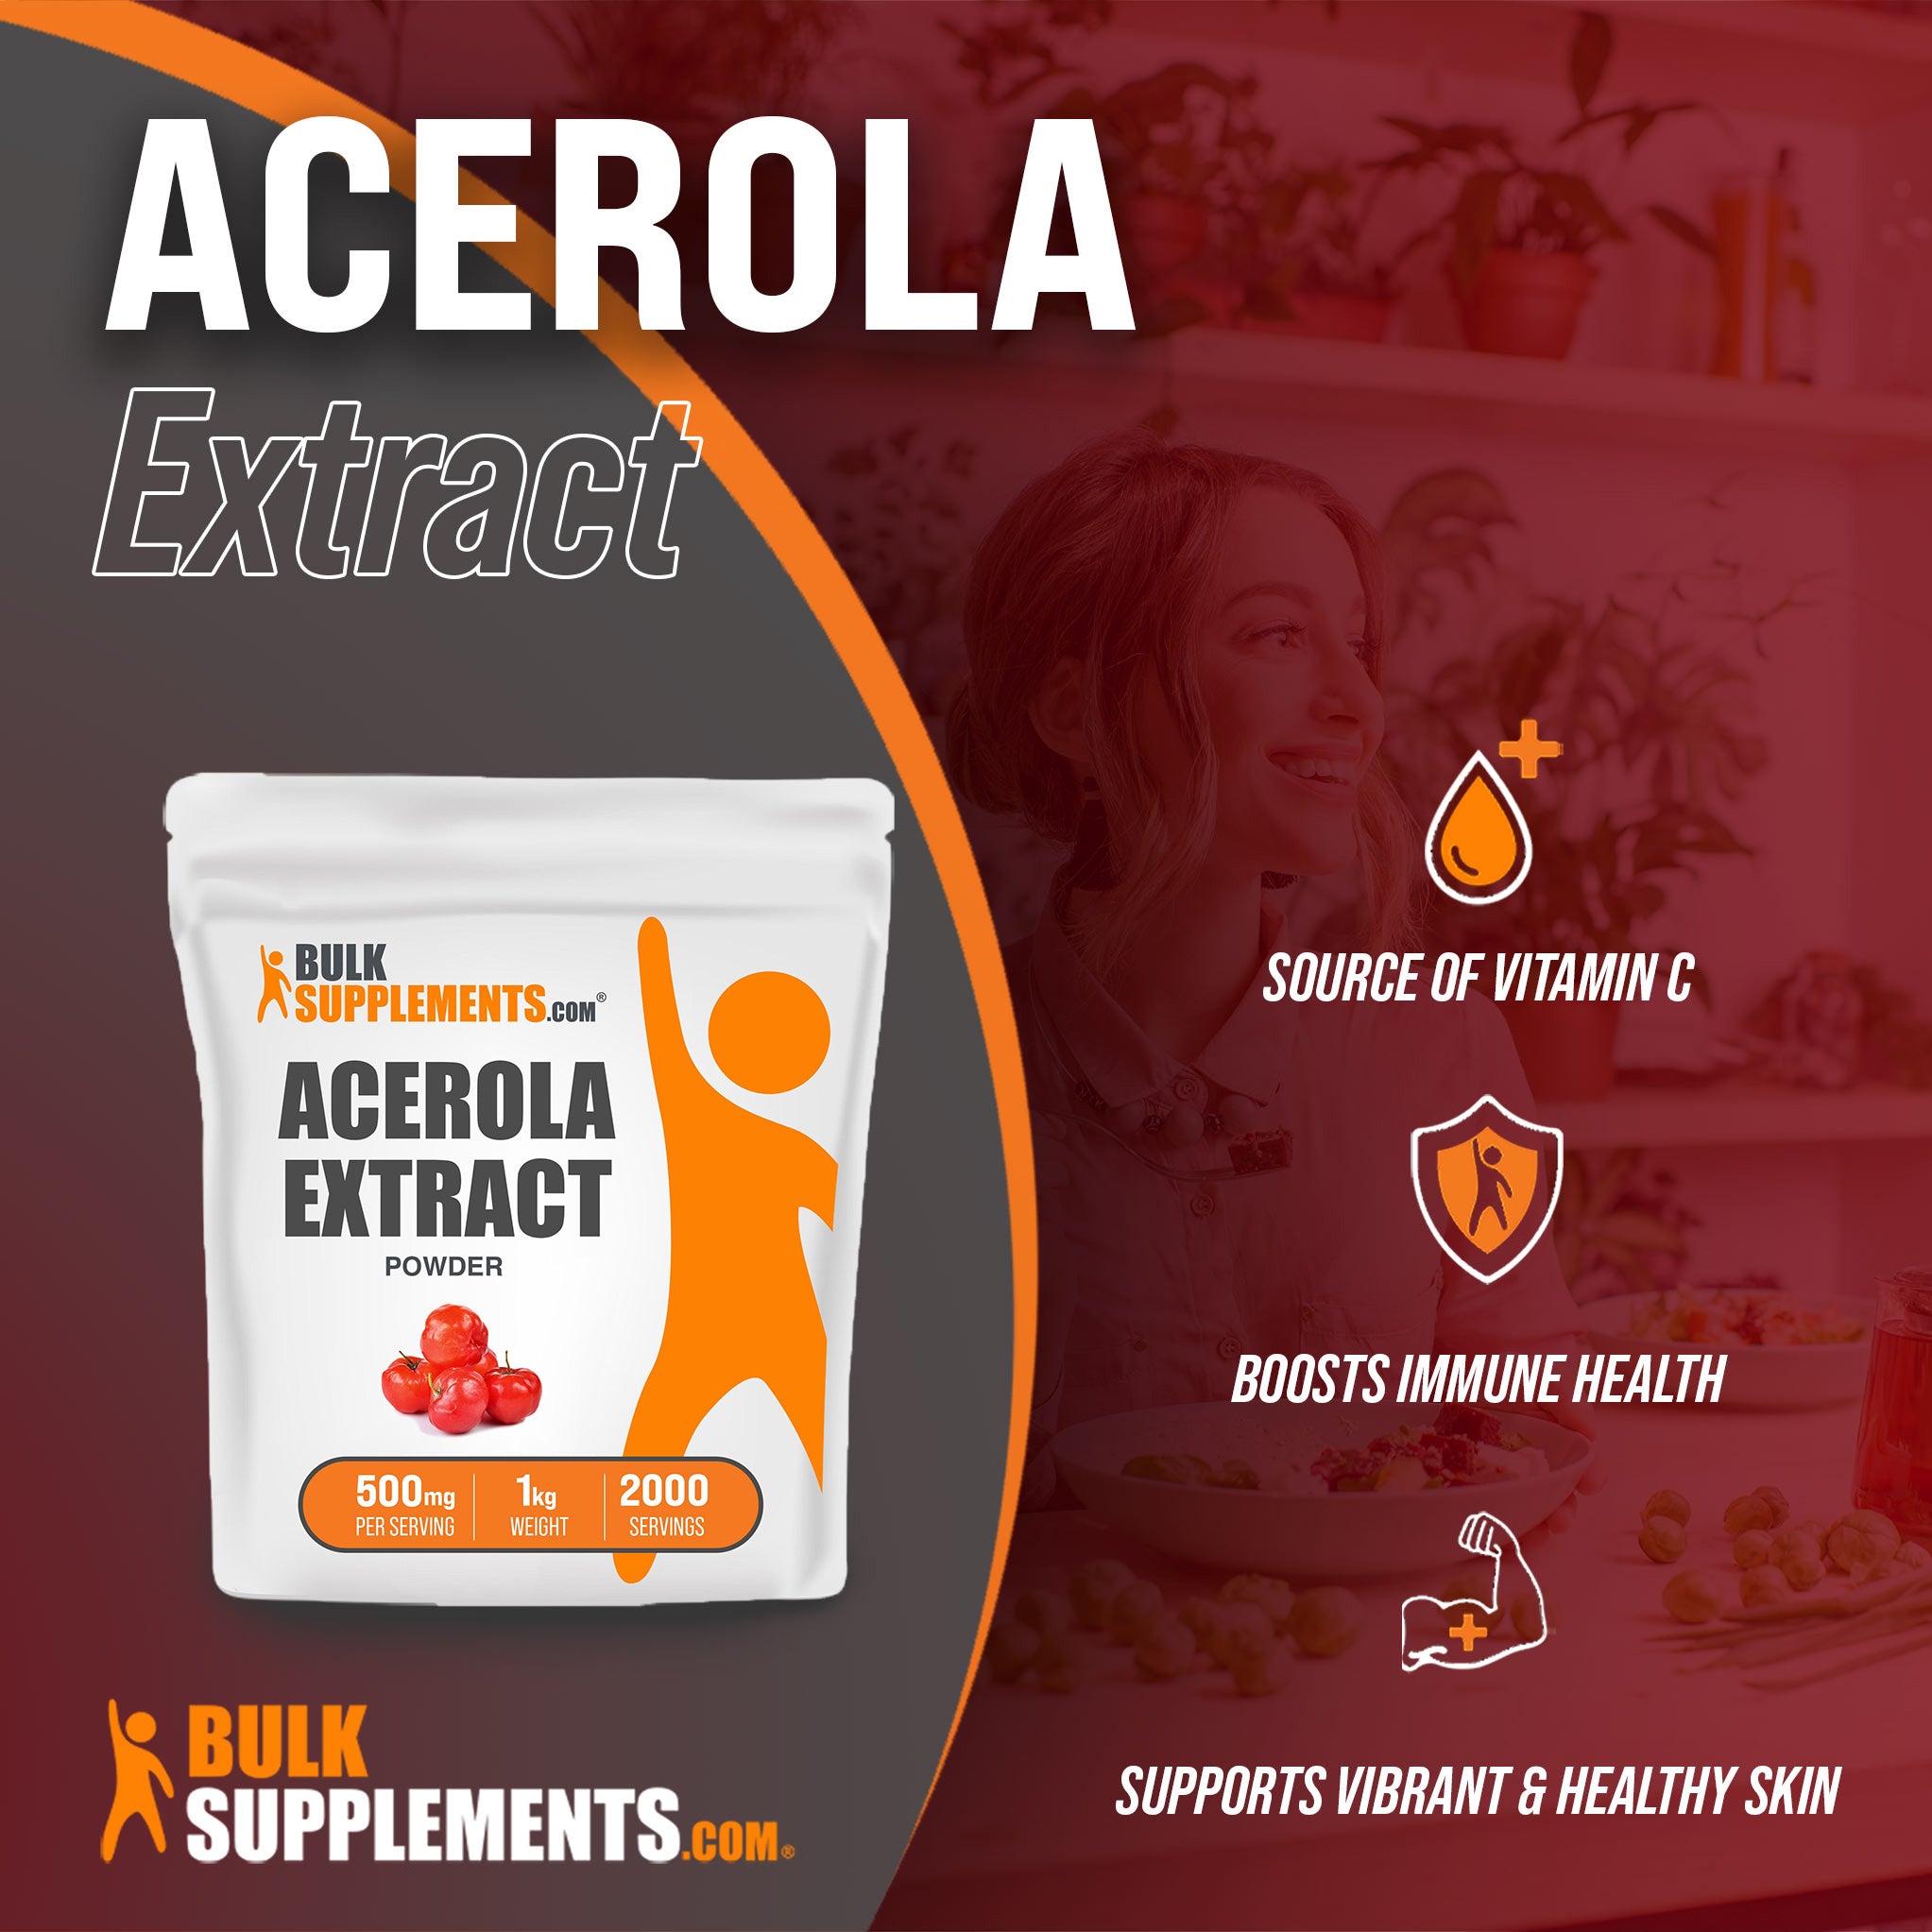 Acerola vitamin c Powder Extract for Immune Health